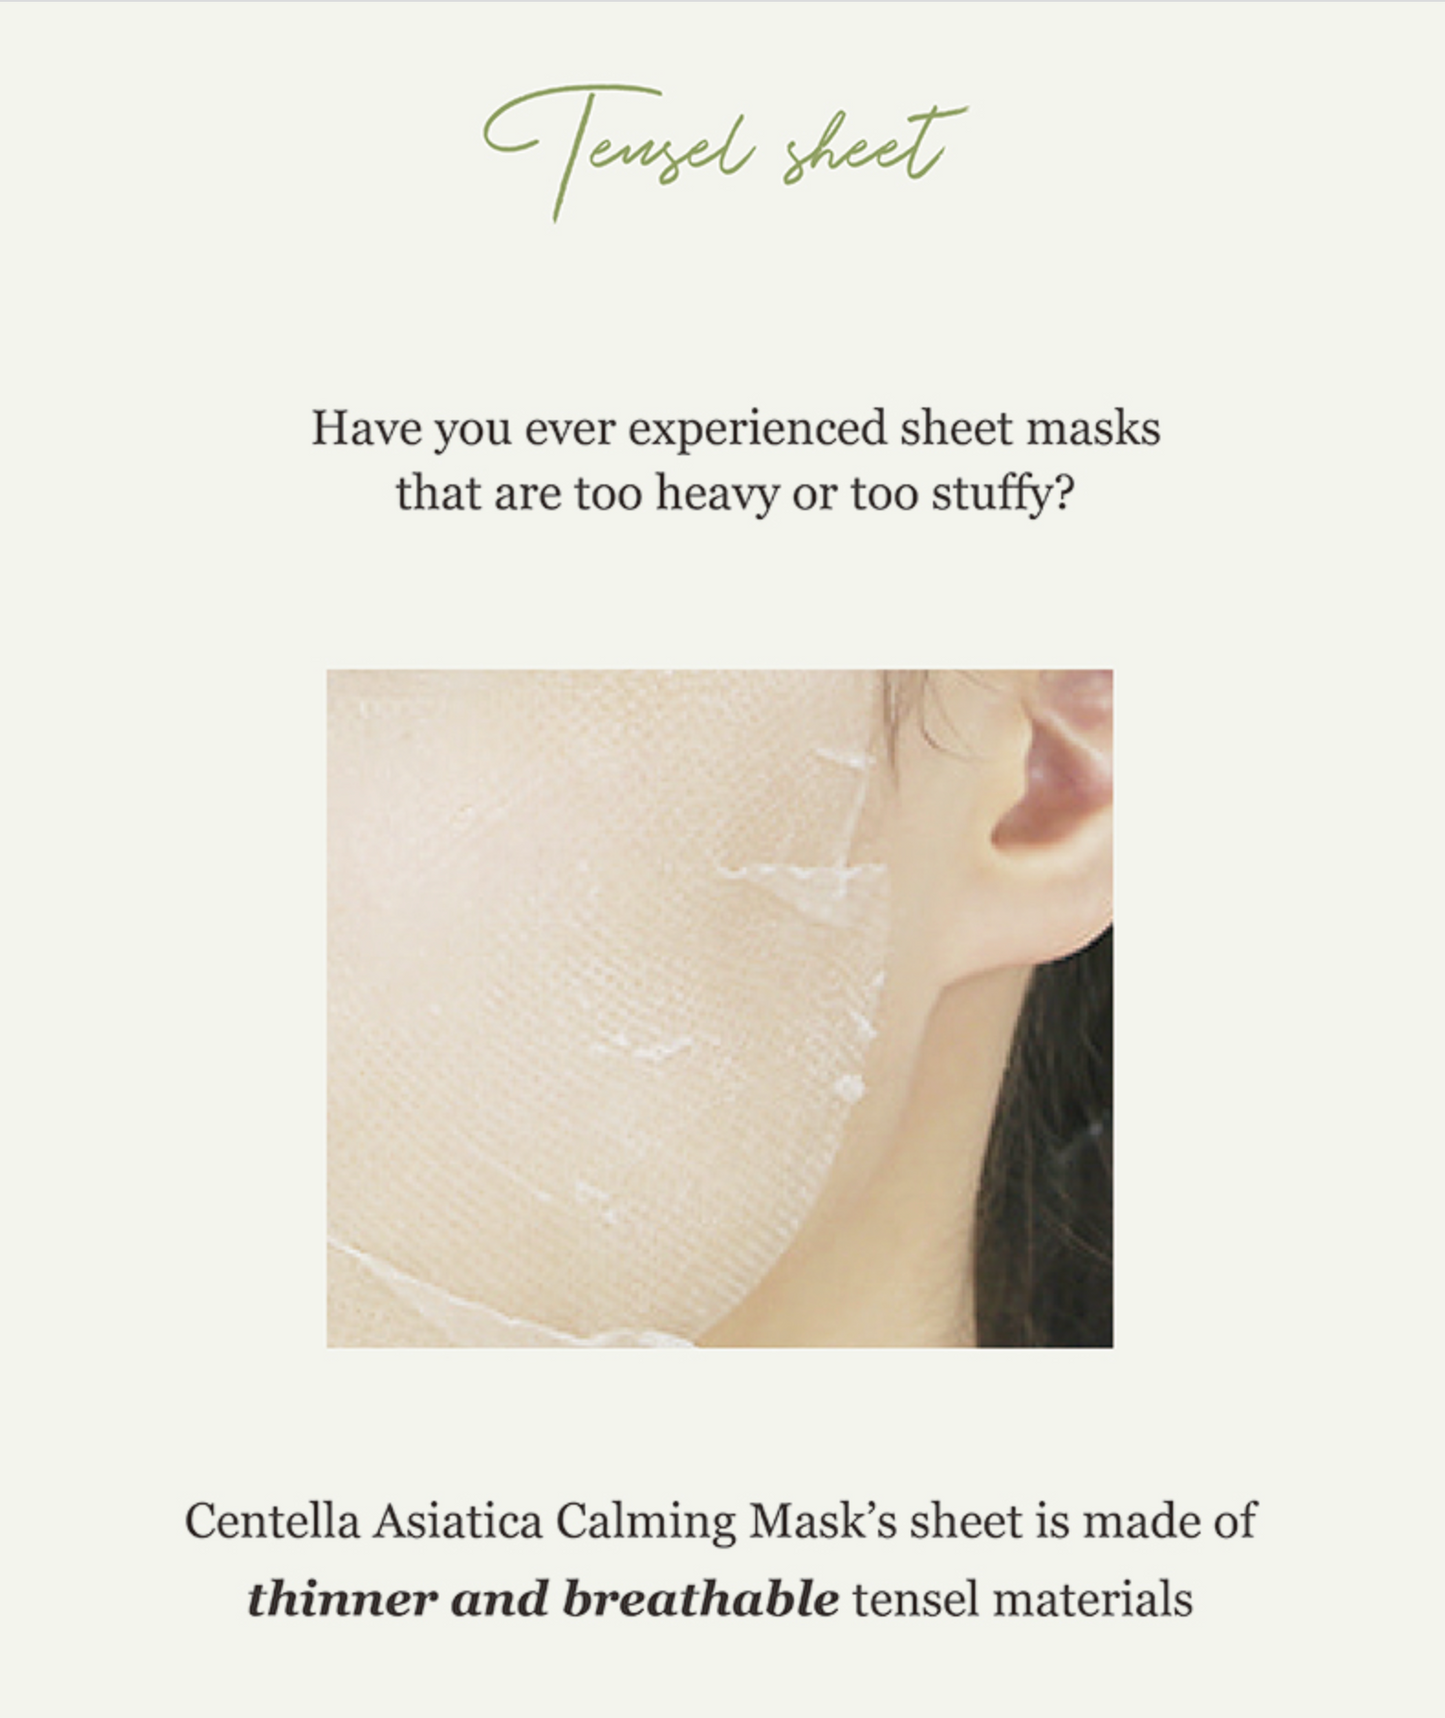 Centella Asiatica Calming Mask